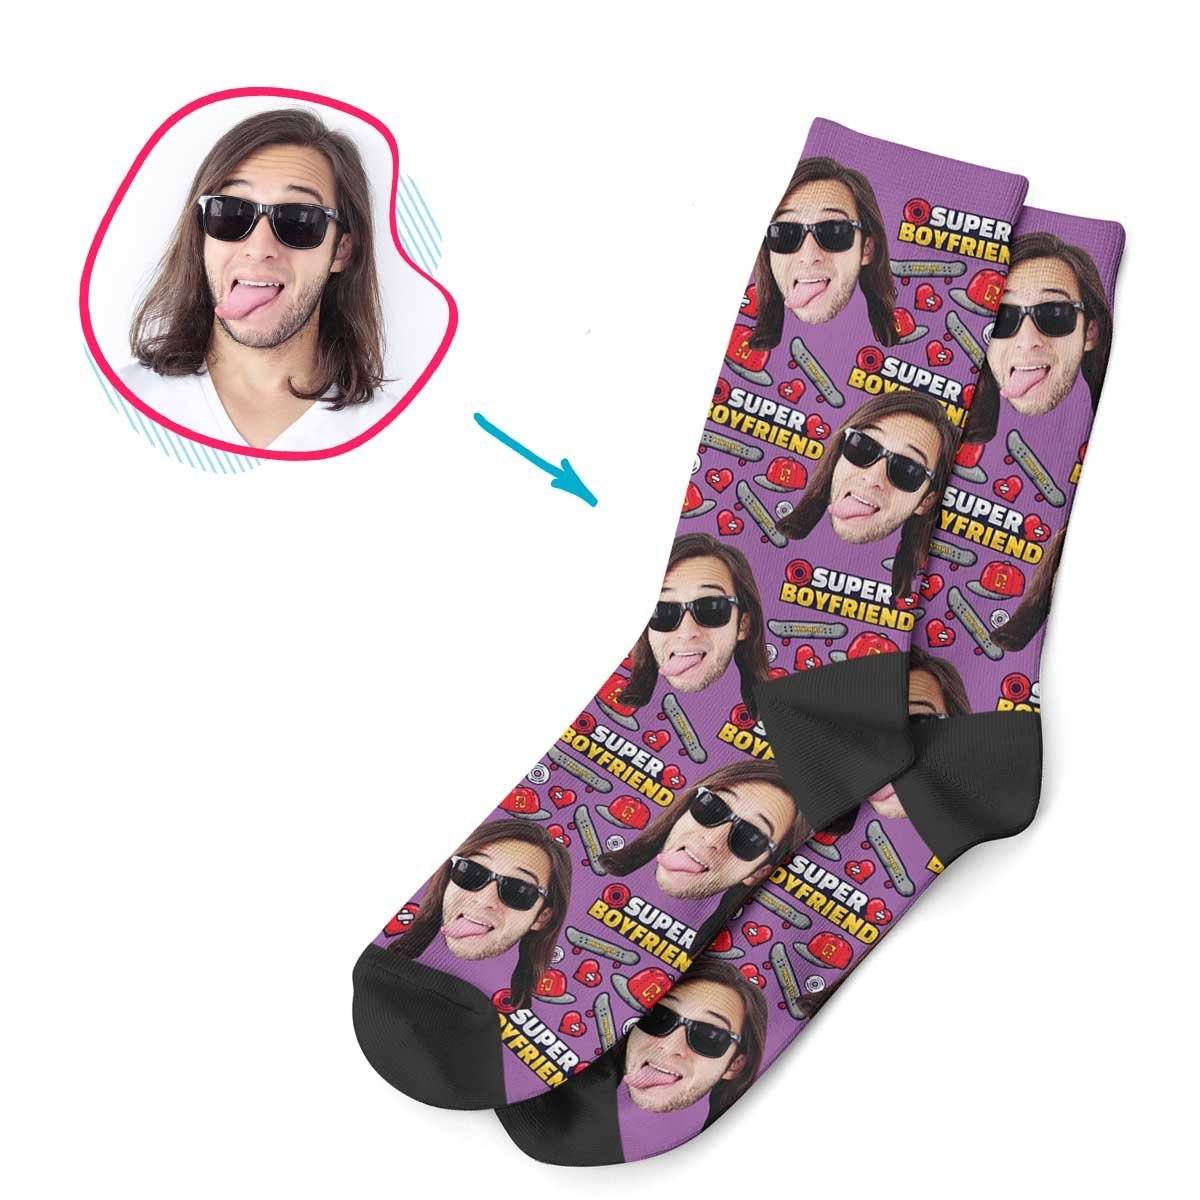 Boyfriend Personalized Socks